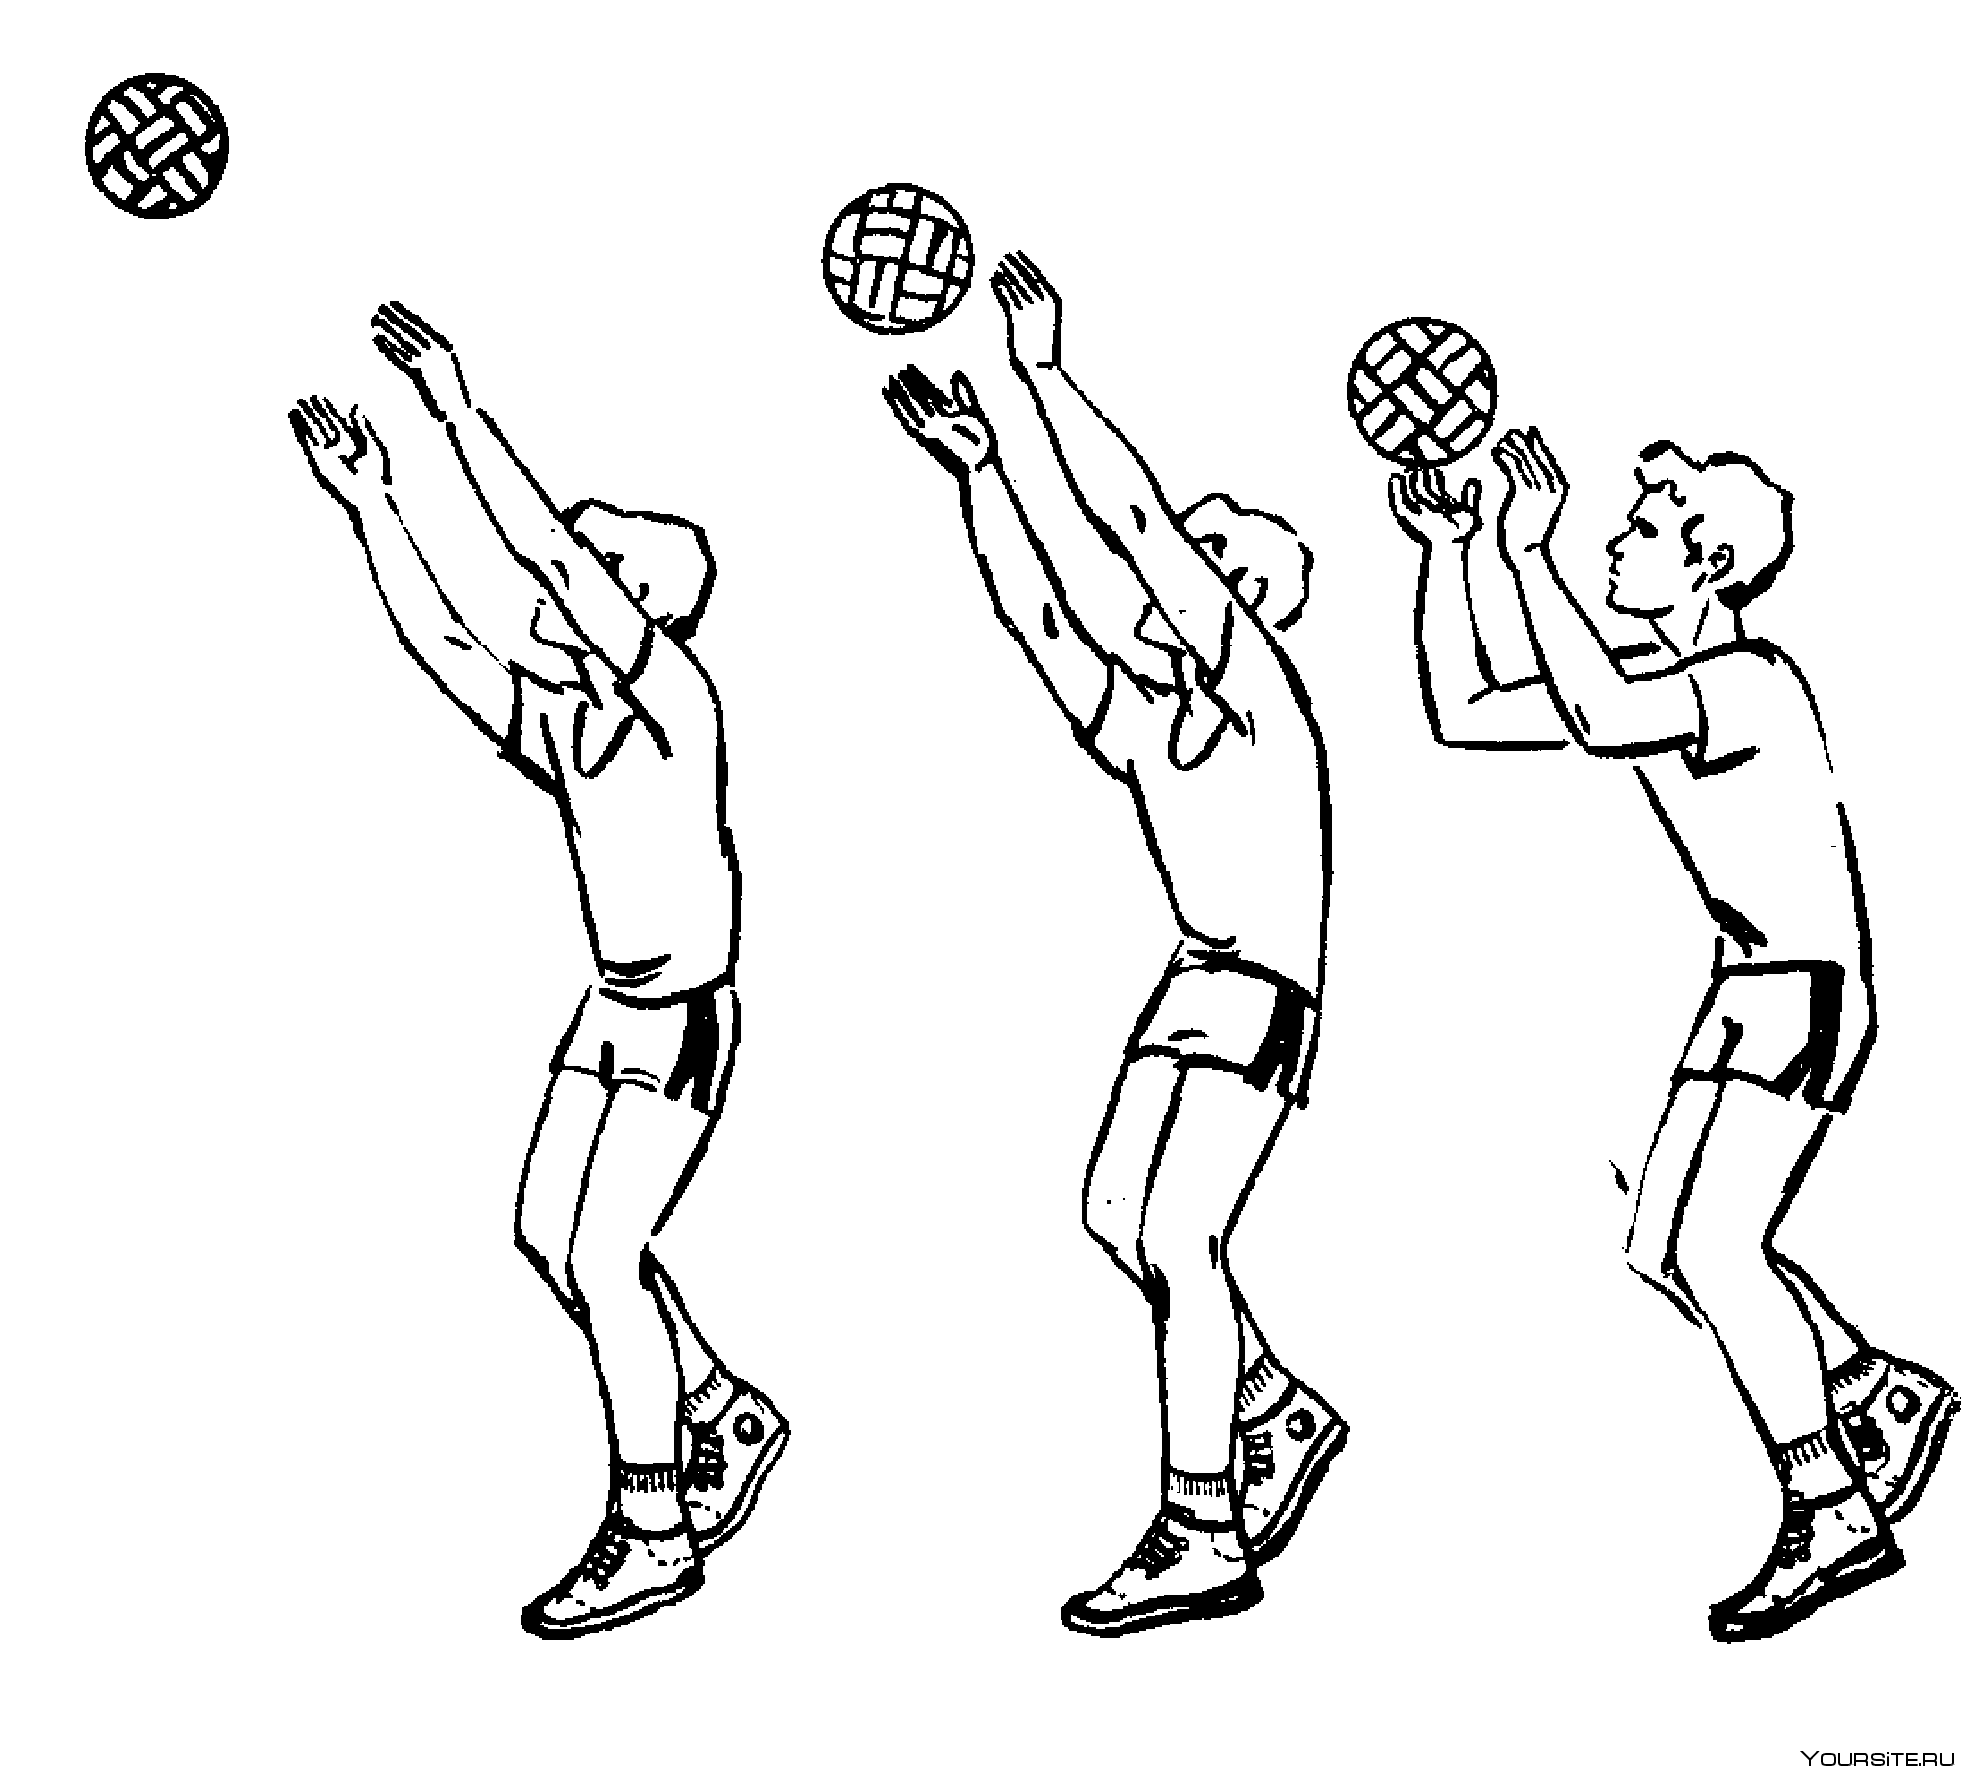 Передача мяча(сверху двумя руками ,снизу двумя руками в волейболе. Передача мяча сверху двумя руками в волейболе. Передача мяча 2 руками сверху в волейболе. Прием мяча снизу в баскетболе техника выполнения.